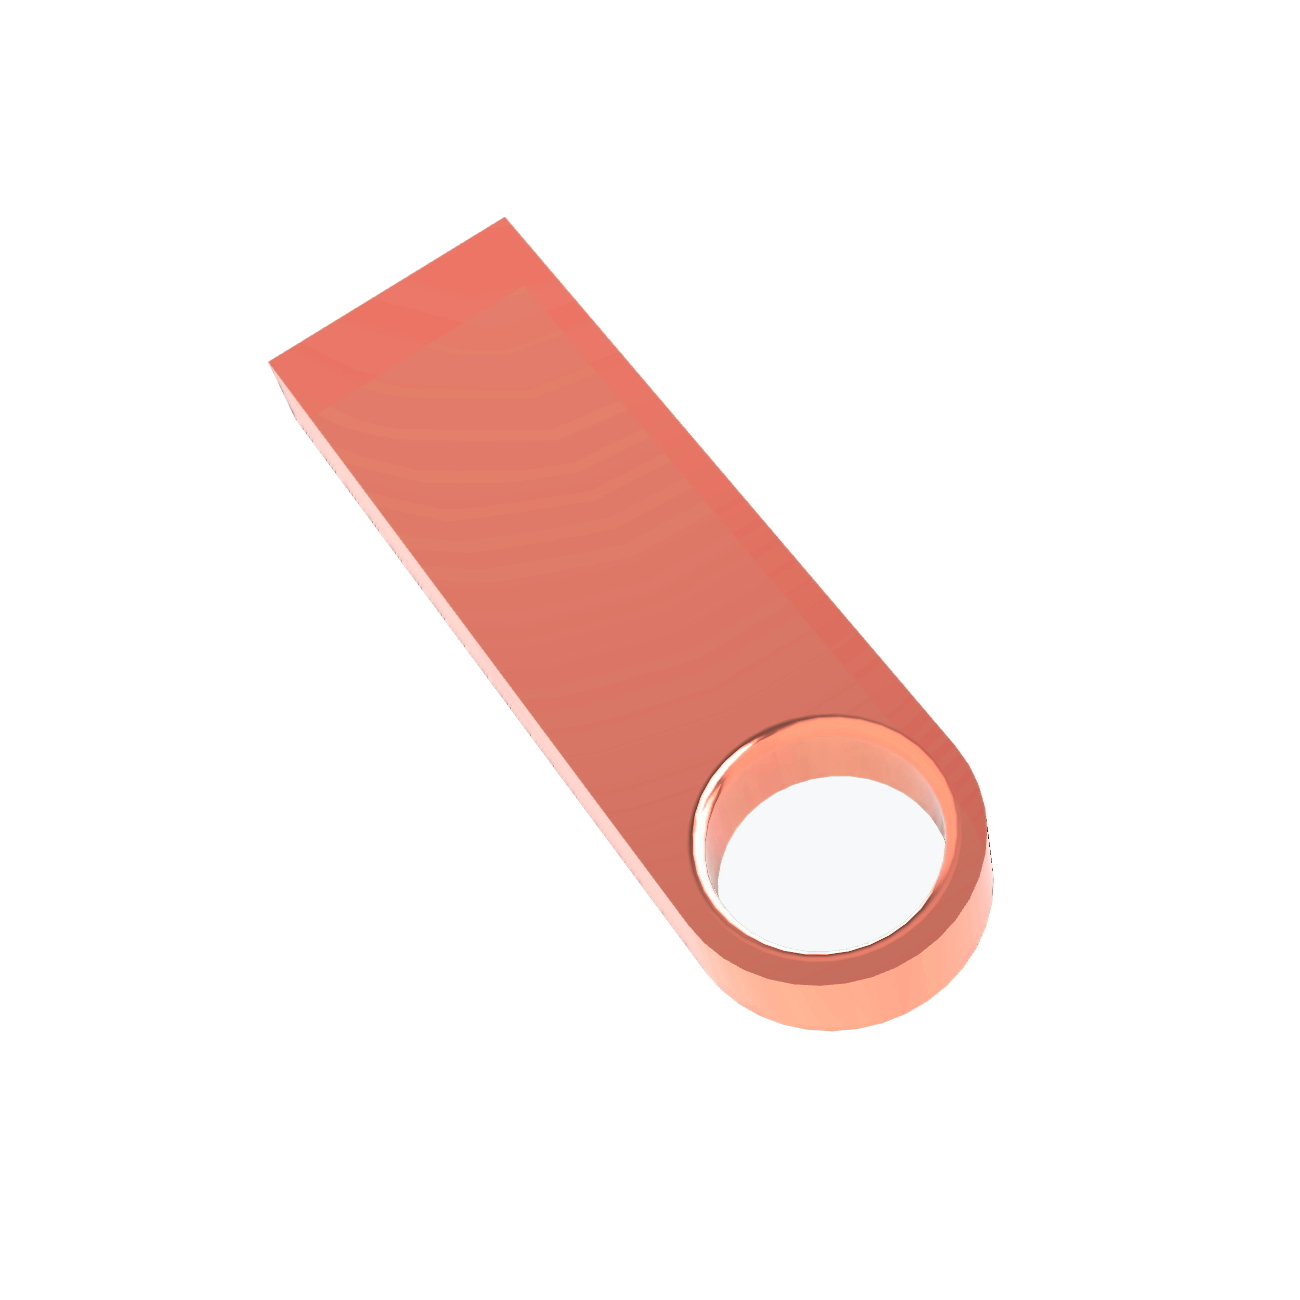 USB GERMANY SE09 GB) ® USB-Stick (Rosegold, 8